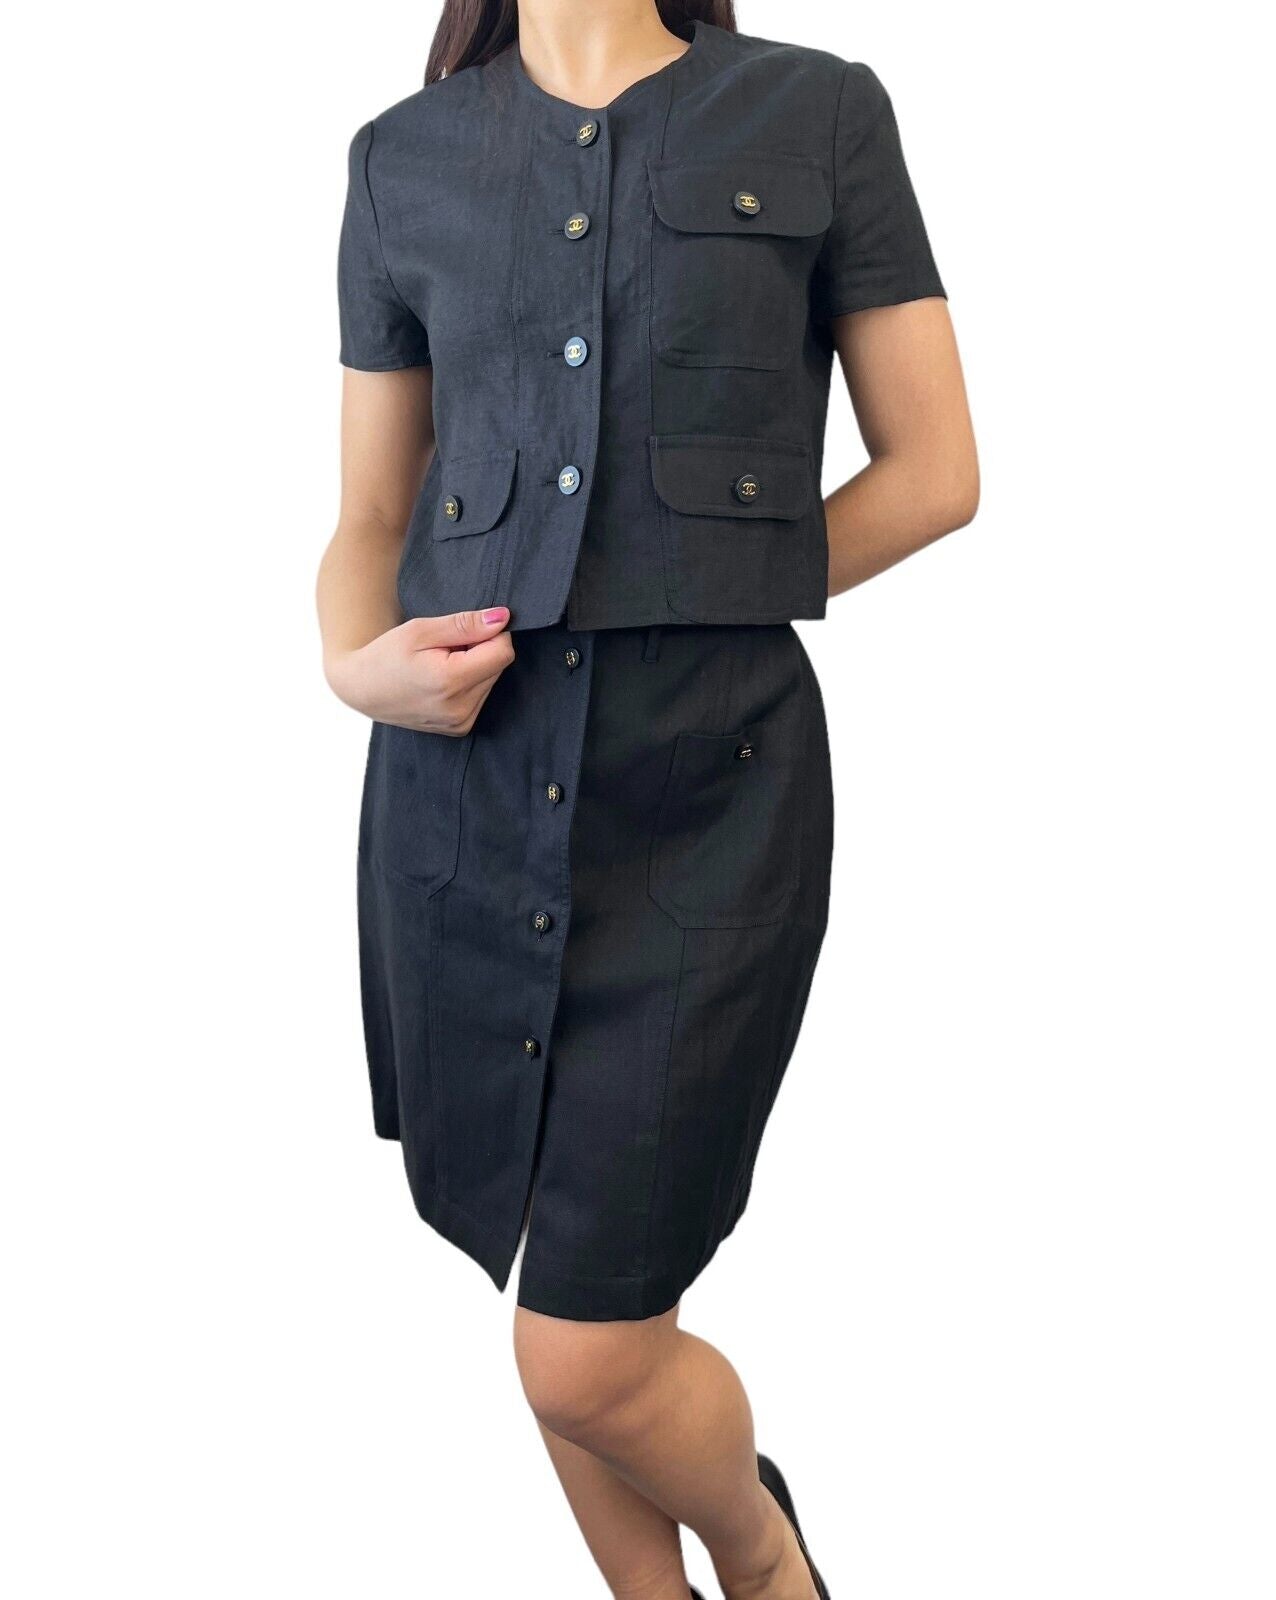 CHANEL Vintage 97P CC Button Linen Shirt Jacket Skirt Set #40 Black Rank AB+